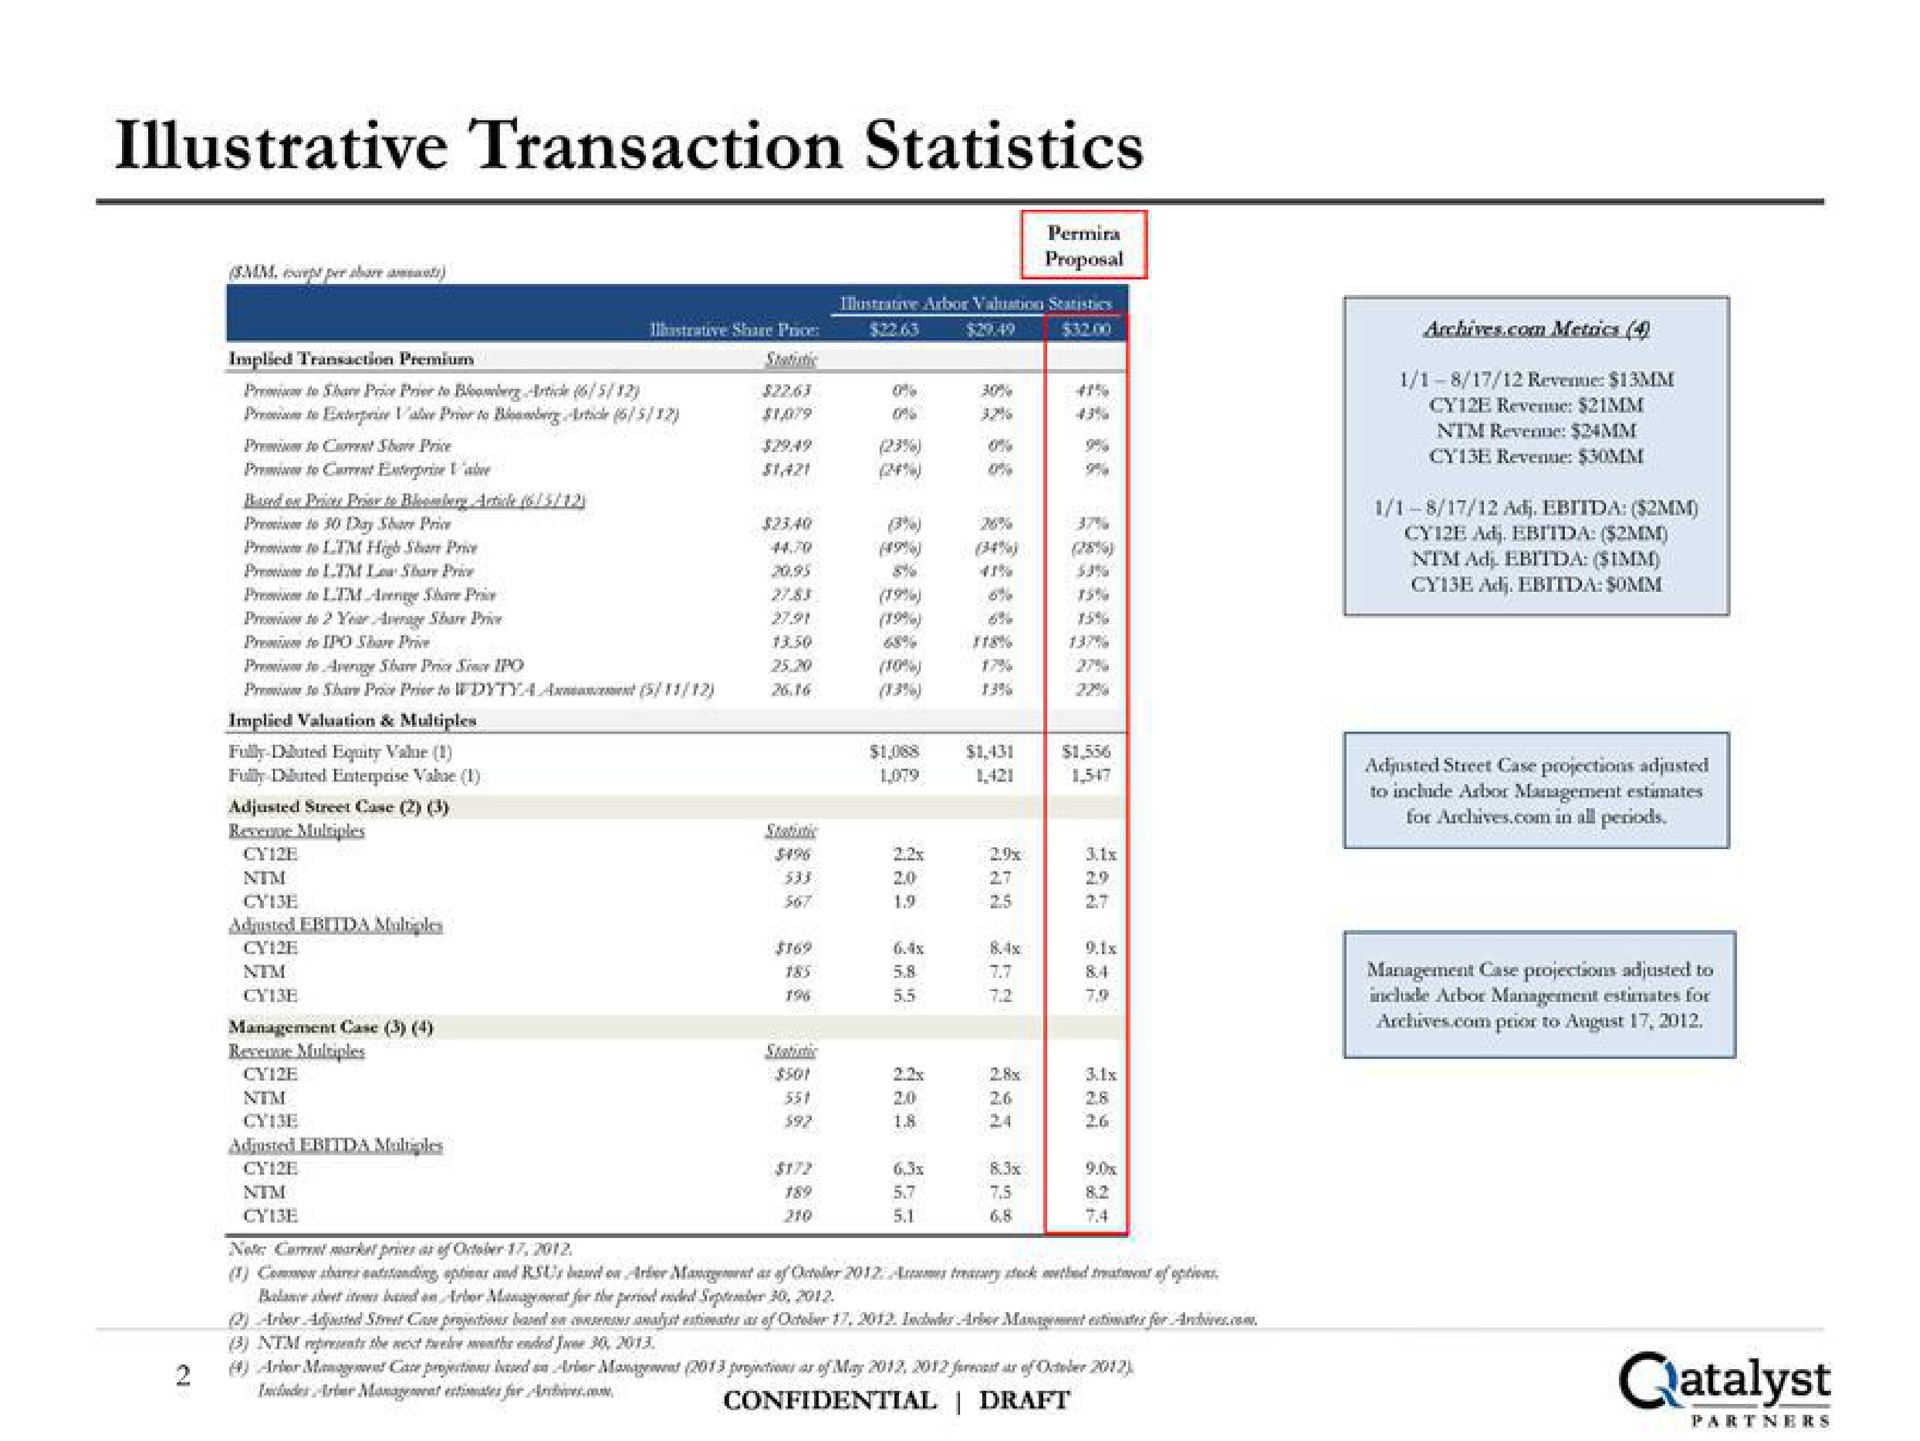 illustrative transaction statistics | Qatalyst Partners